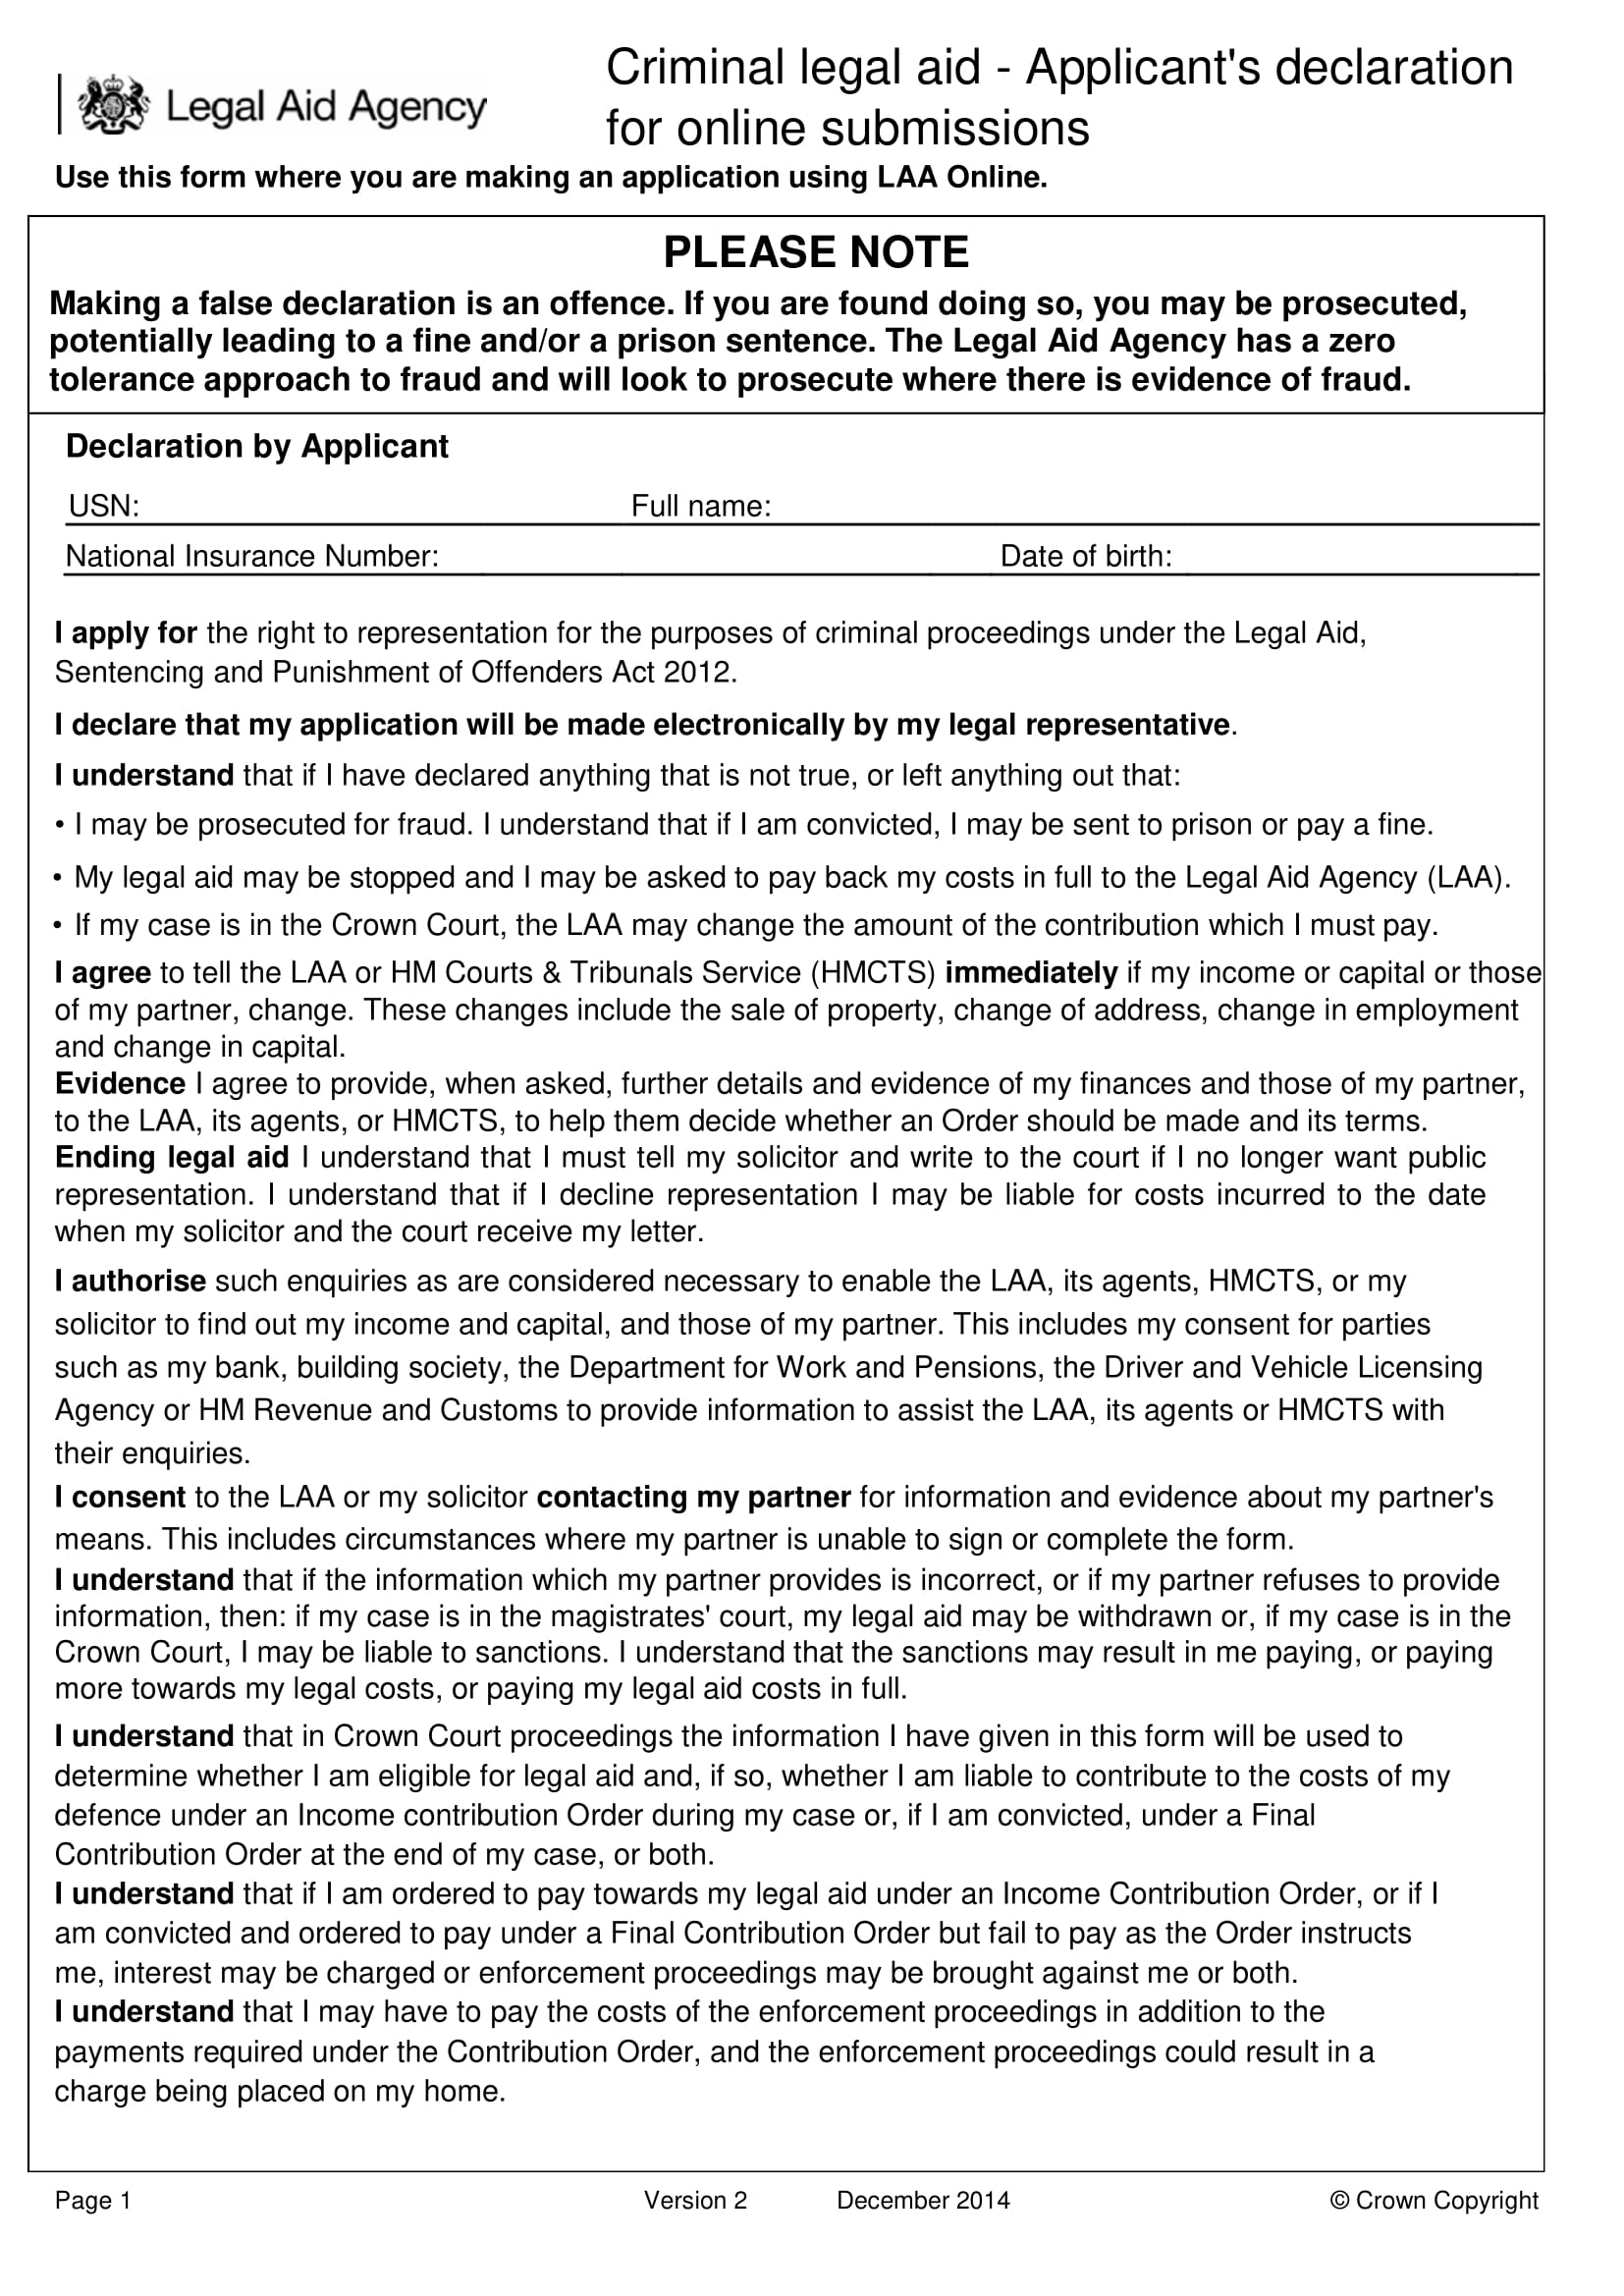 applicant declaration form sample 1